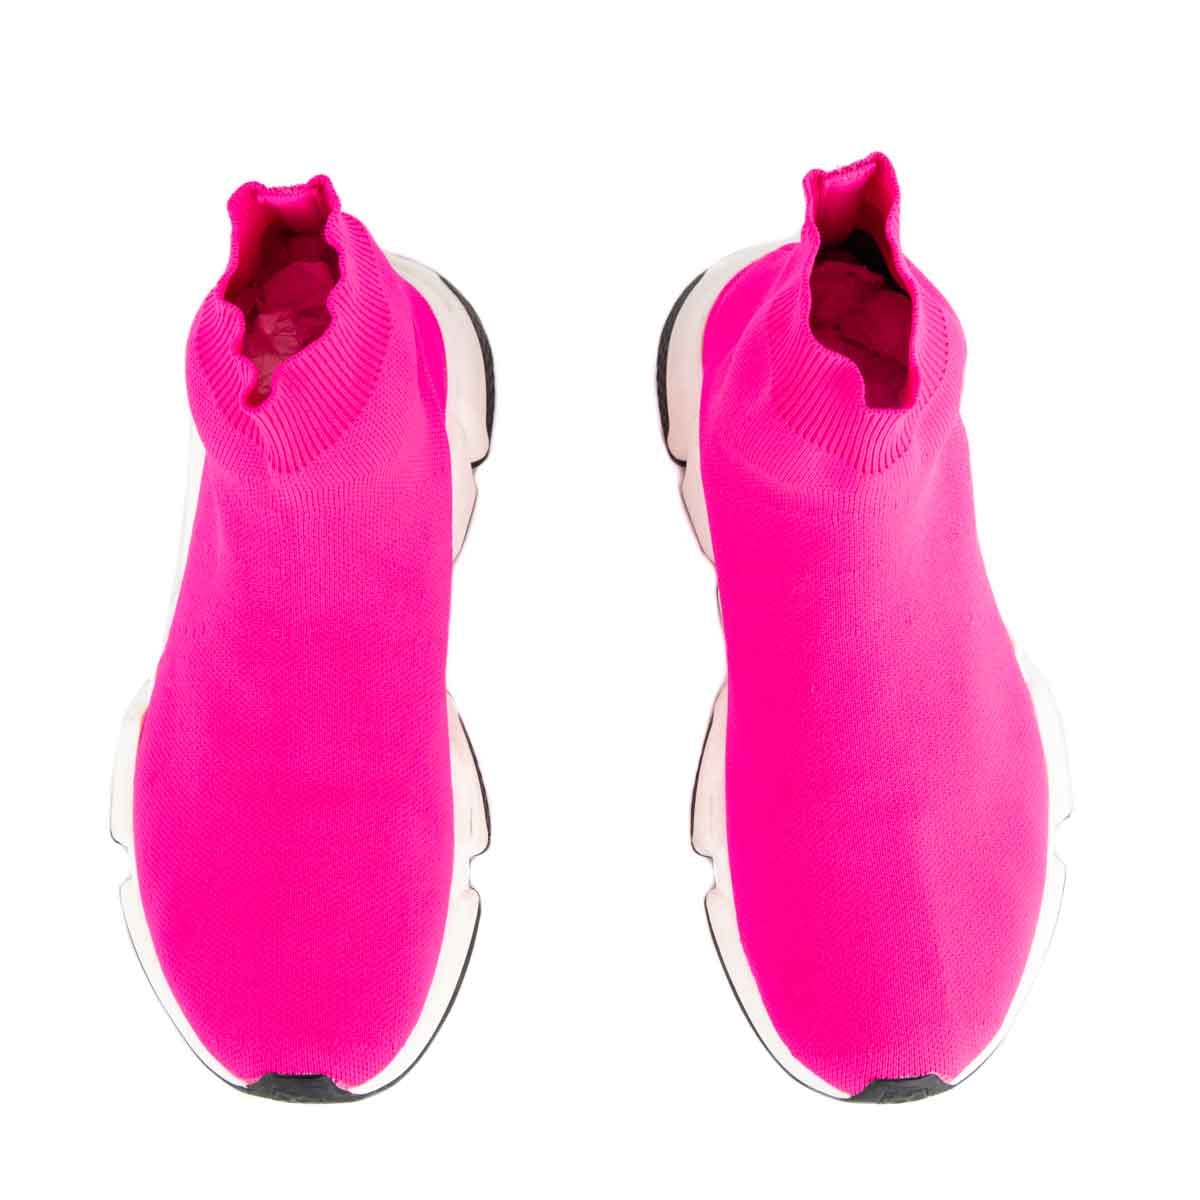 Balenciaga Knife spandex sock boots in pink worn by Lisa in DDUDU DDUDU  music video of Blackpink  Spotern